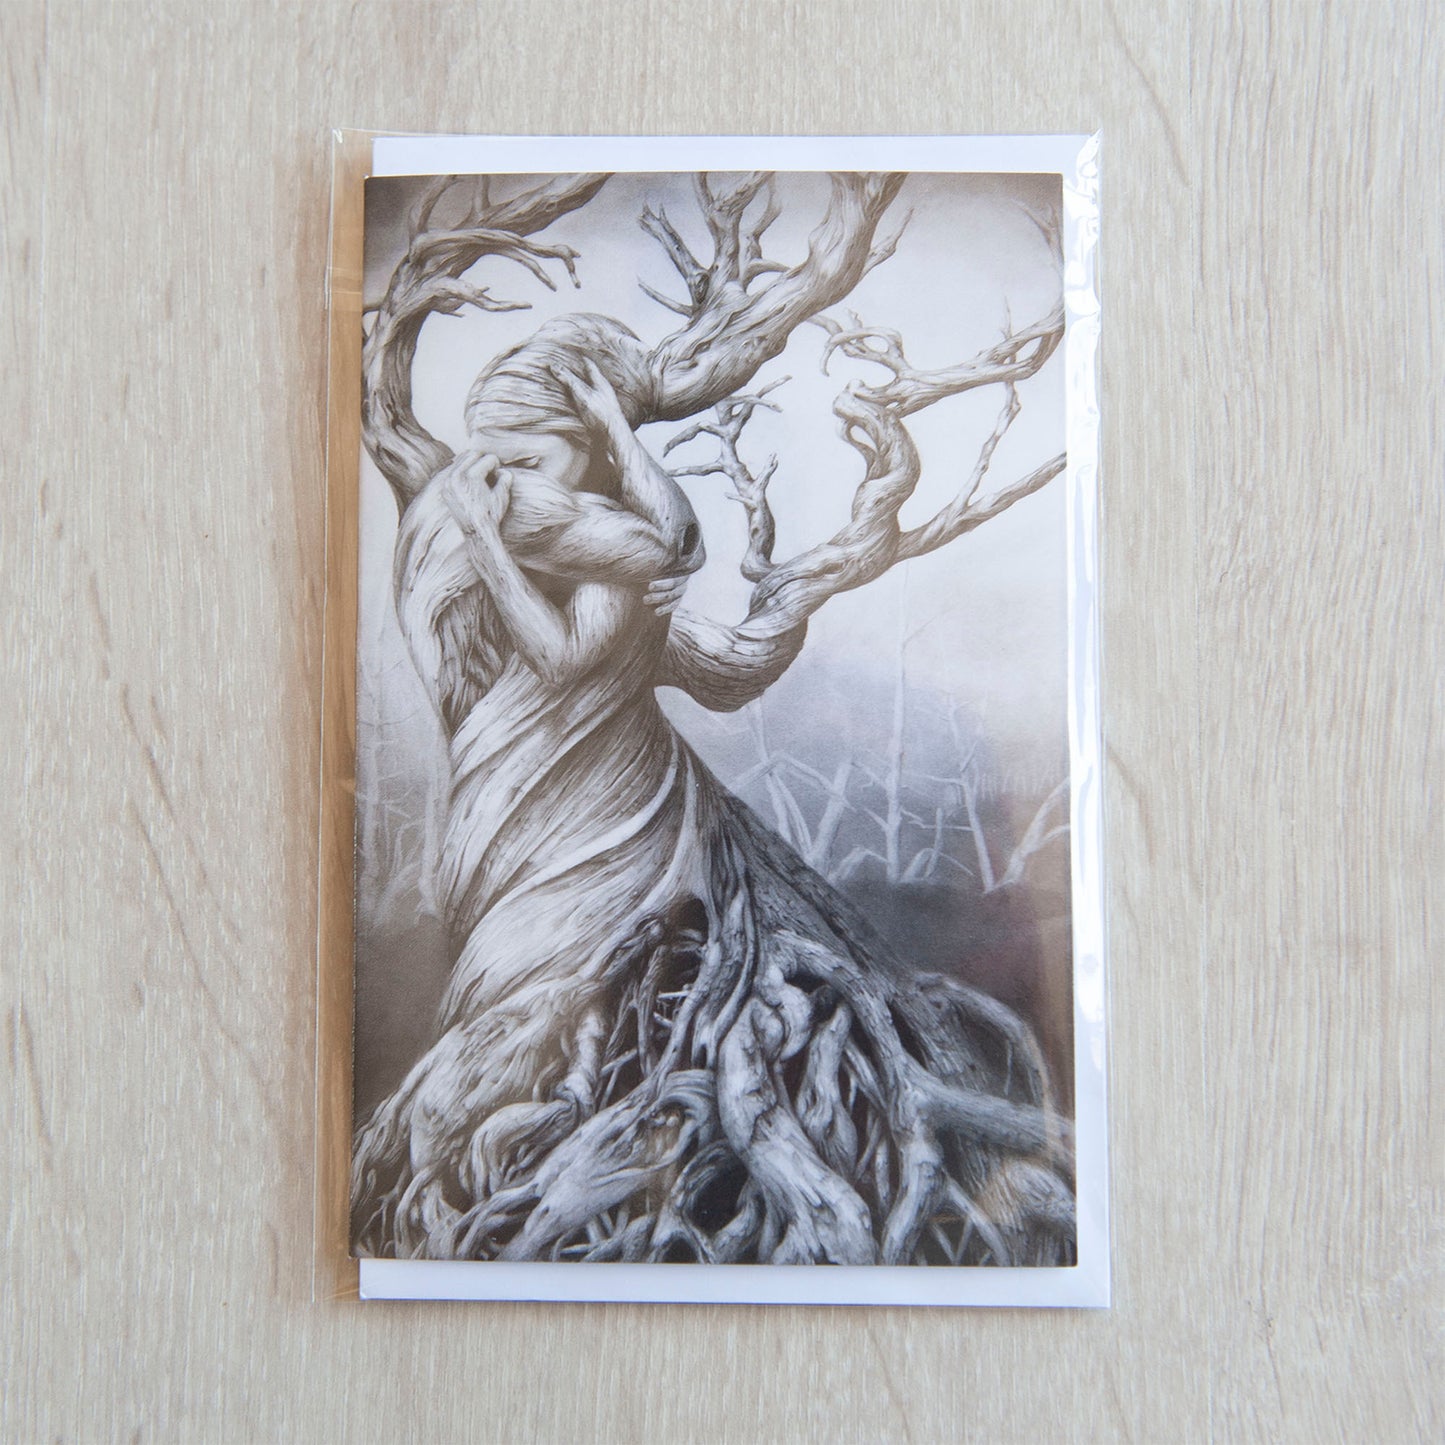 'One Tree' greeting card